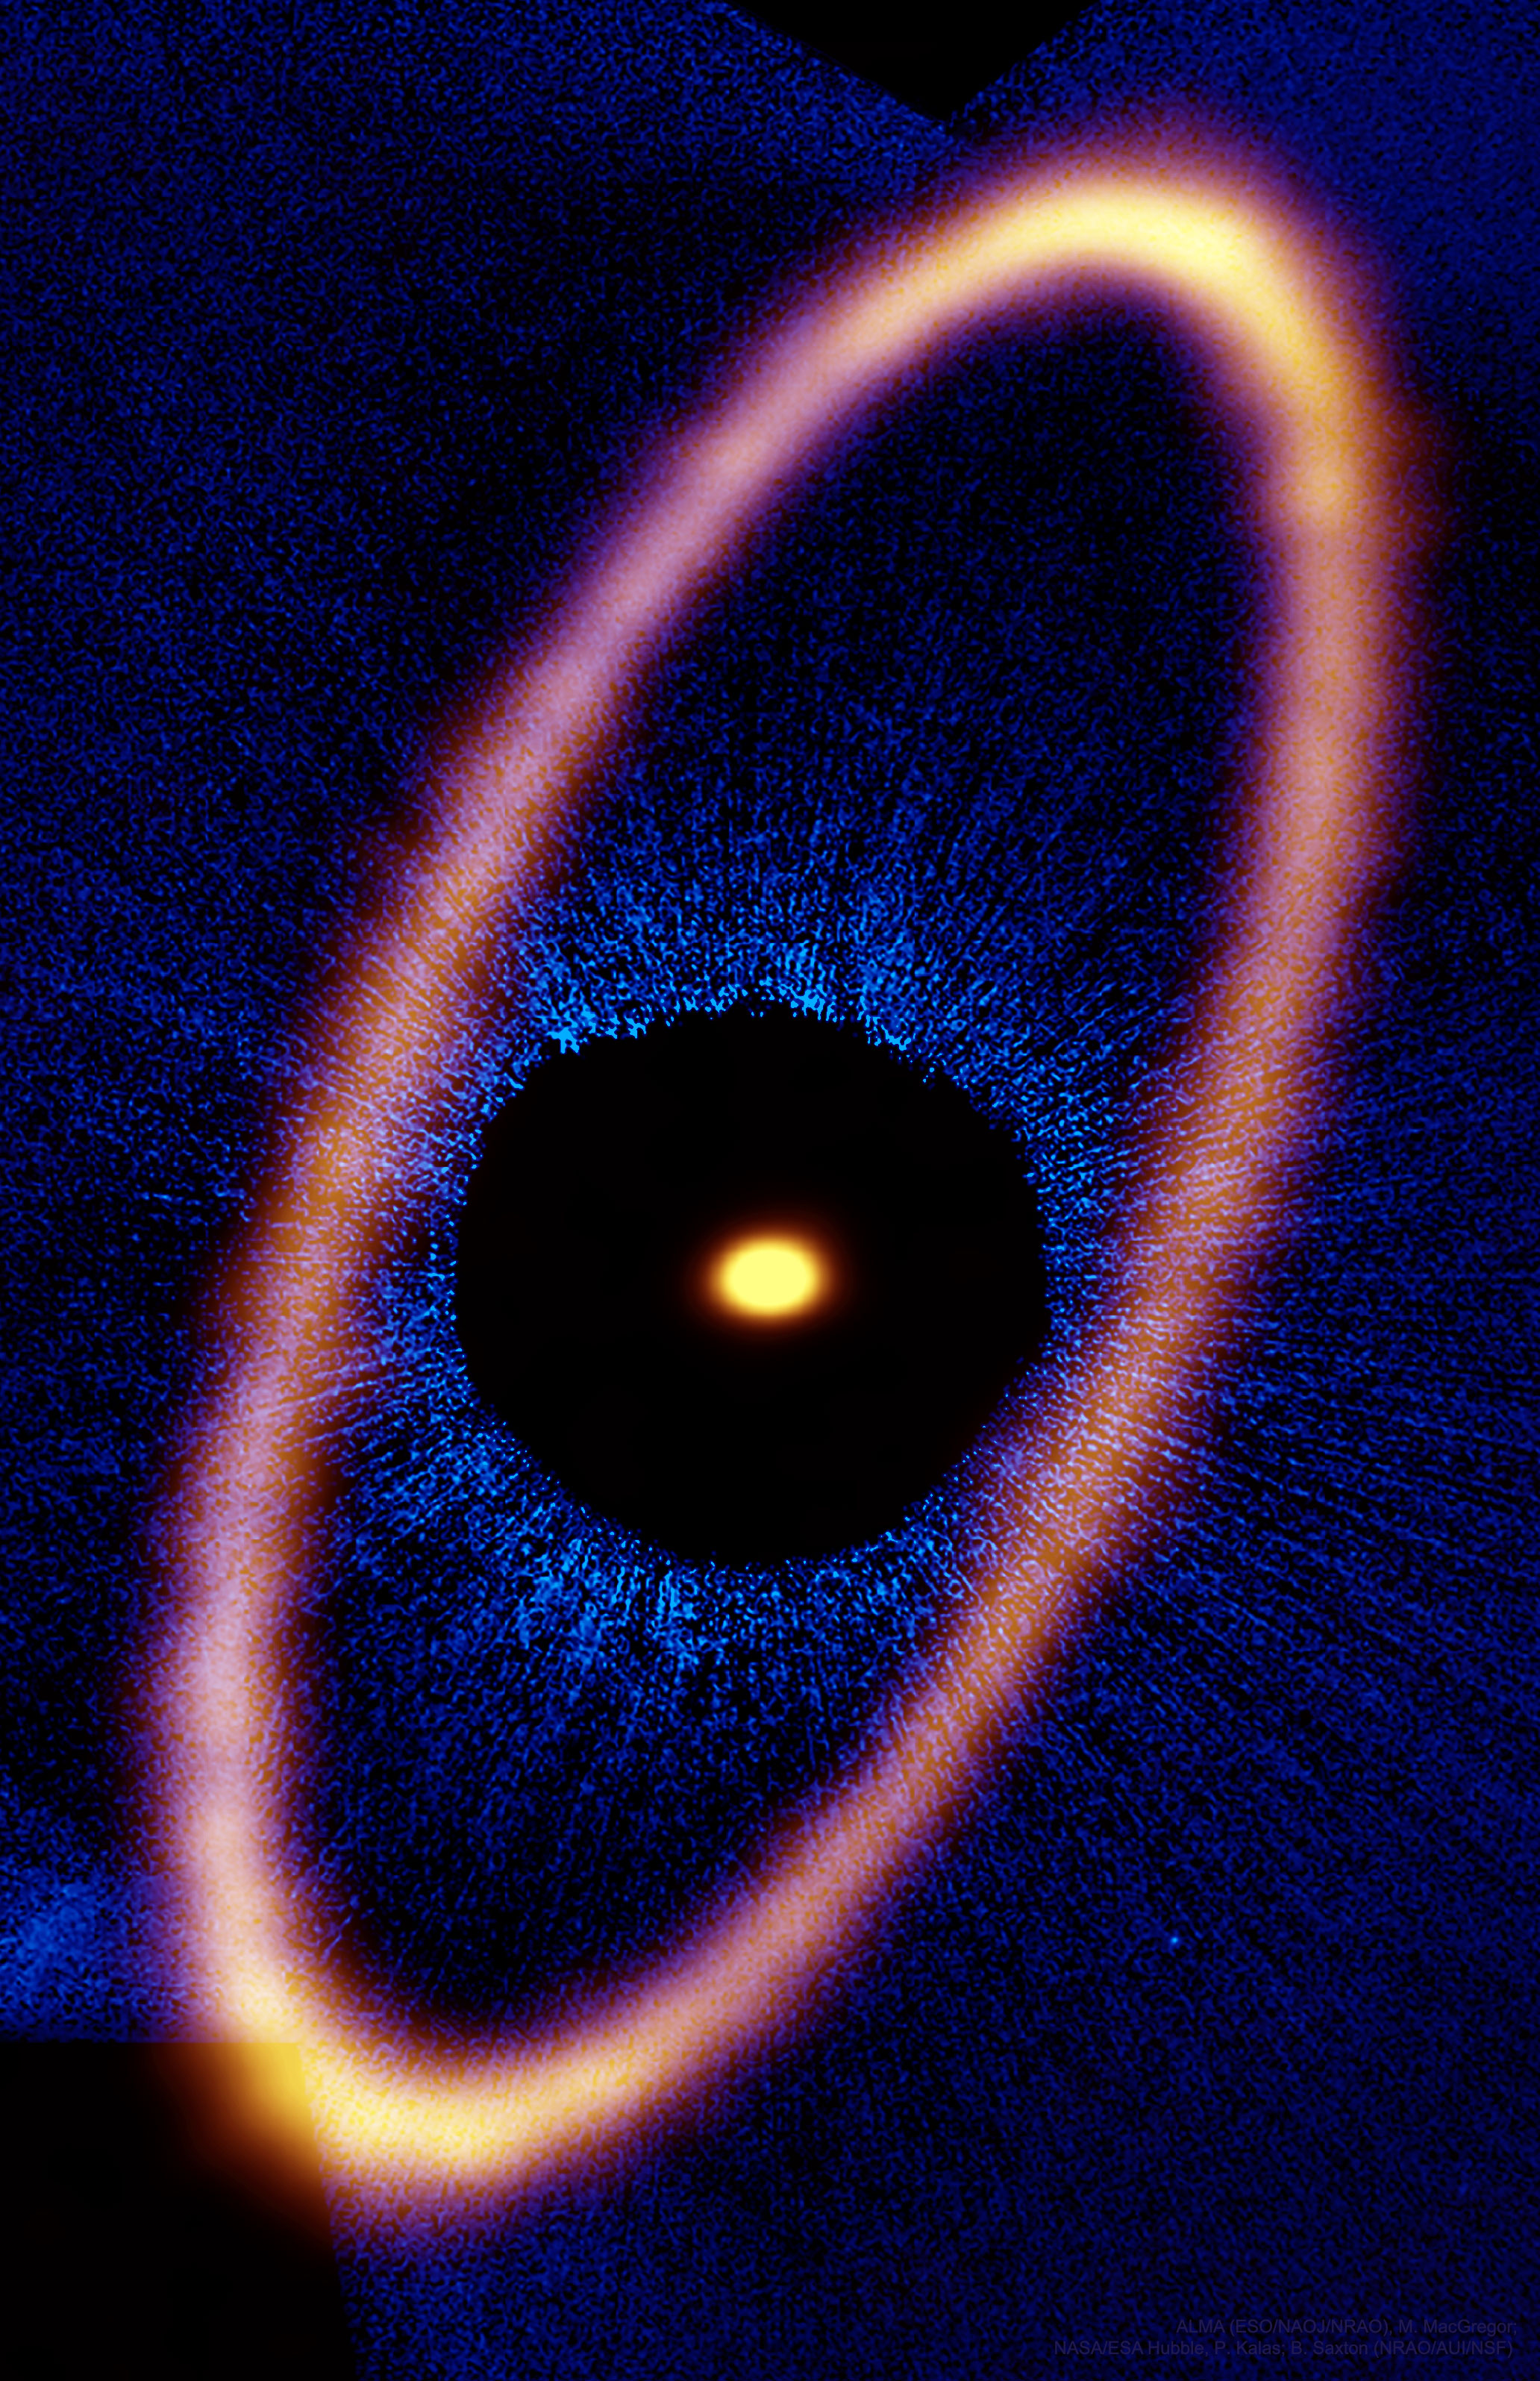 Ice Ring around Nearby Star Fomalhaut  